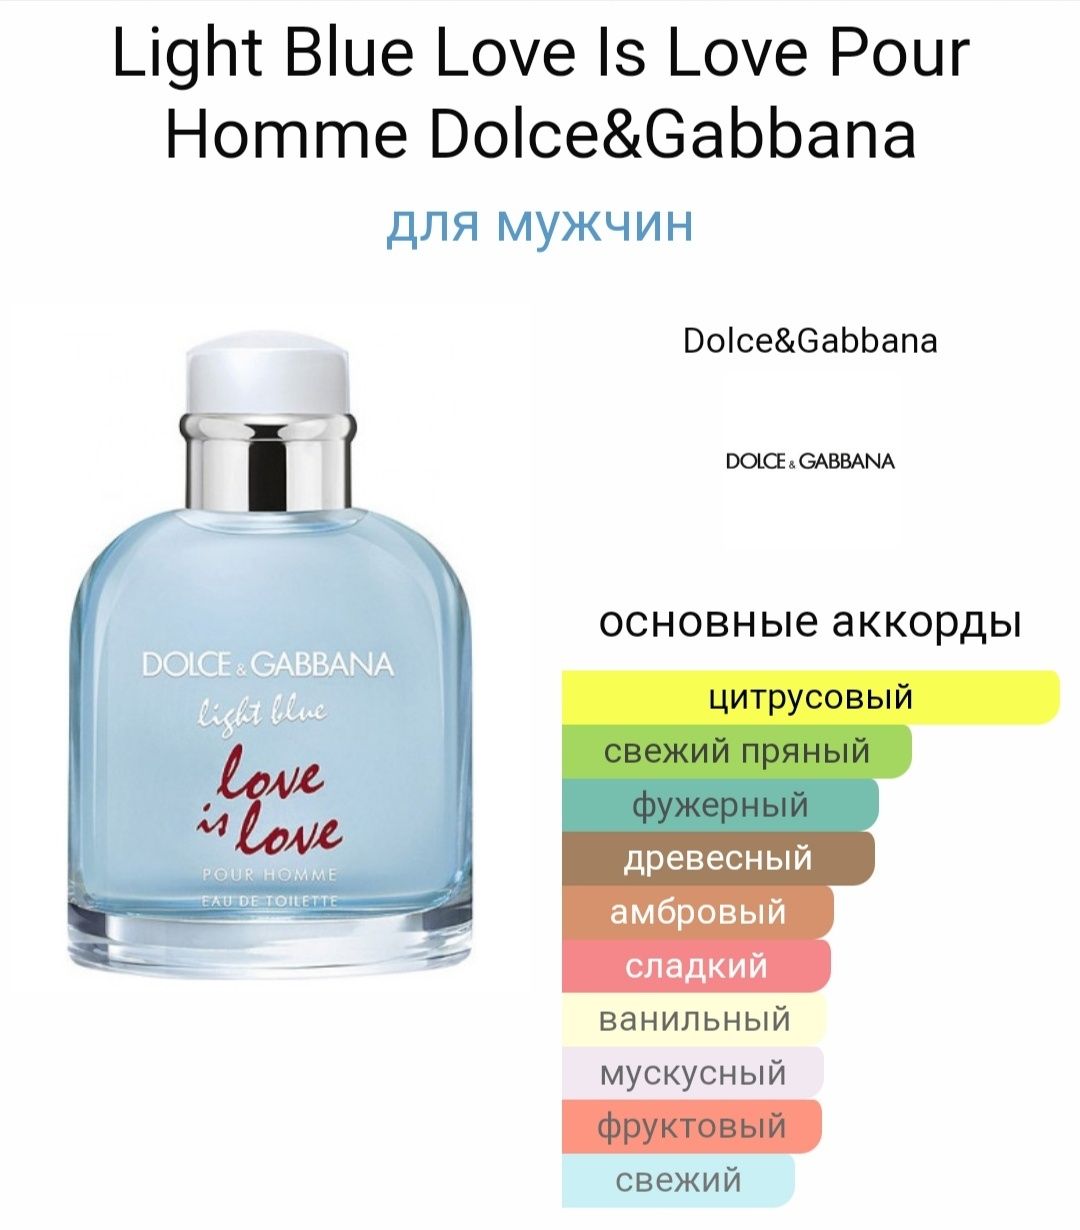 Homme Dolce&Gabbana  Light Blue Love Is Love Pour